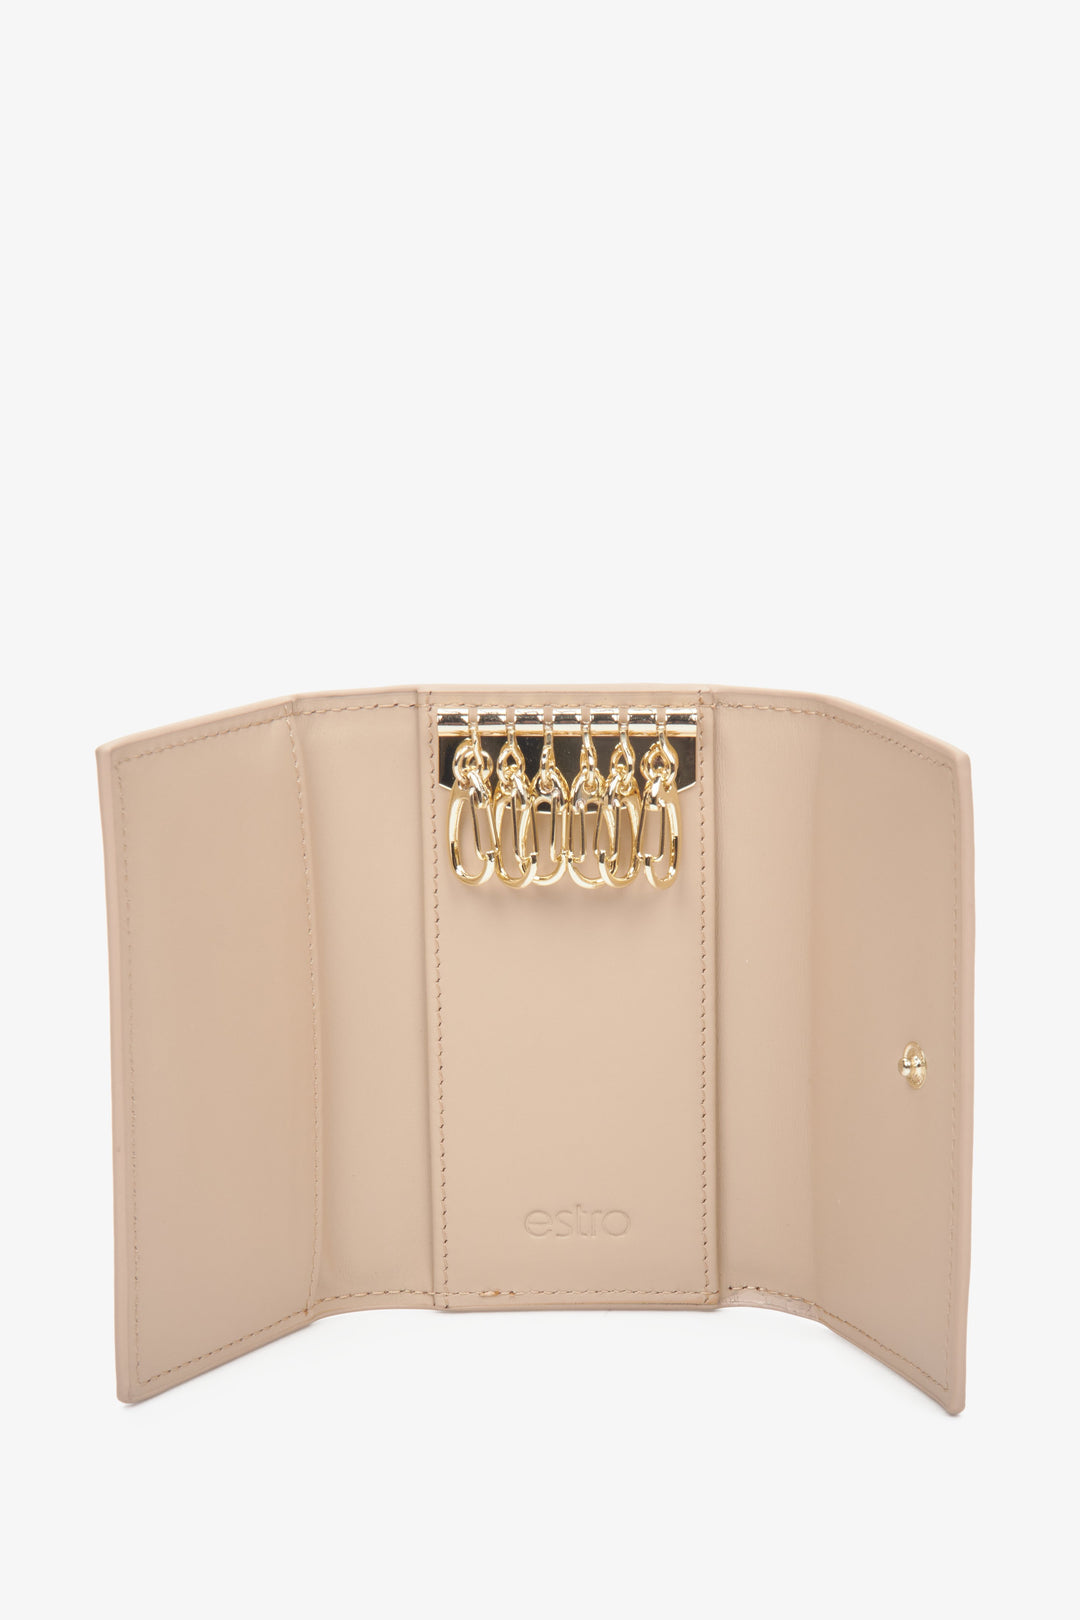 Estro light beige genuine leather key case - close-up of the interior.